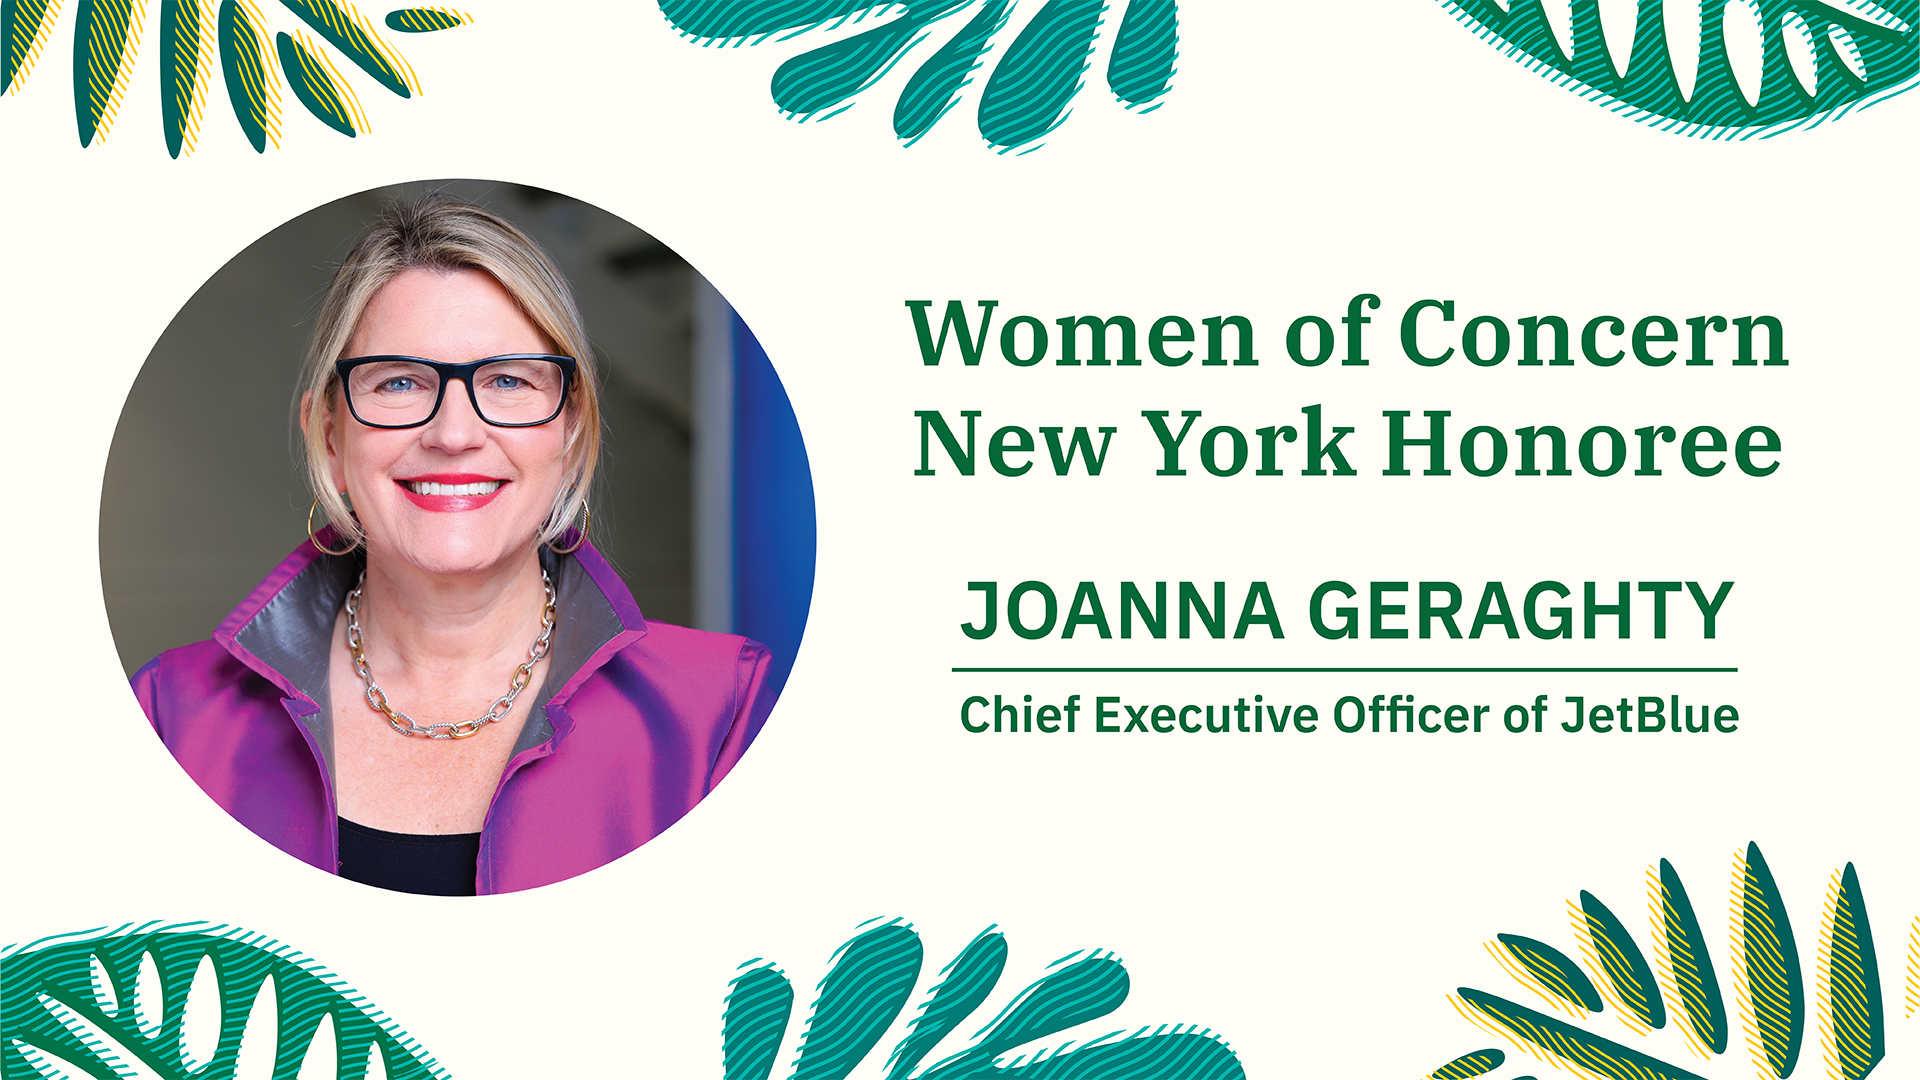 Joanna Geraghty, Women of Concern New York Honoree